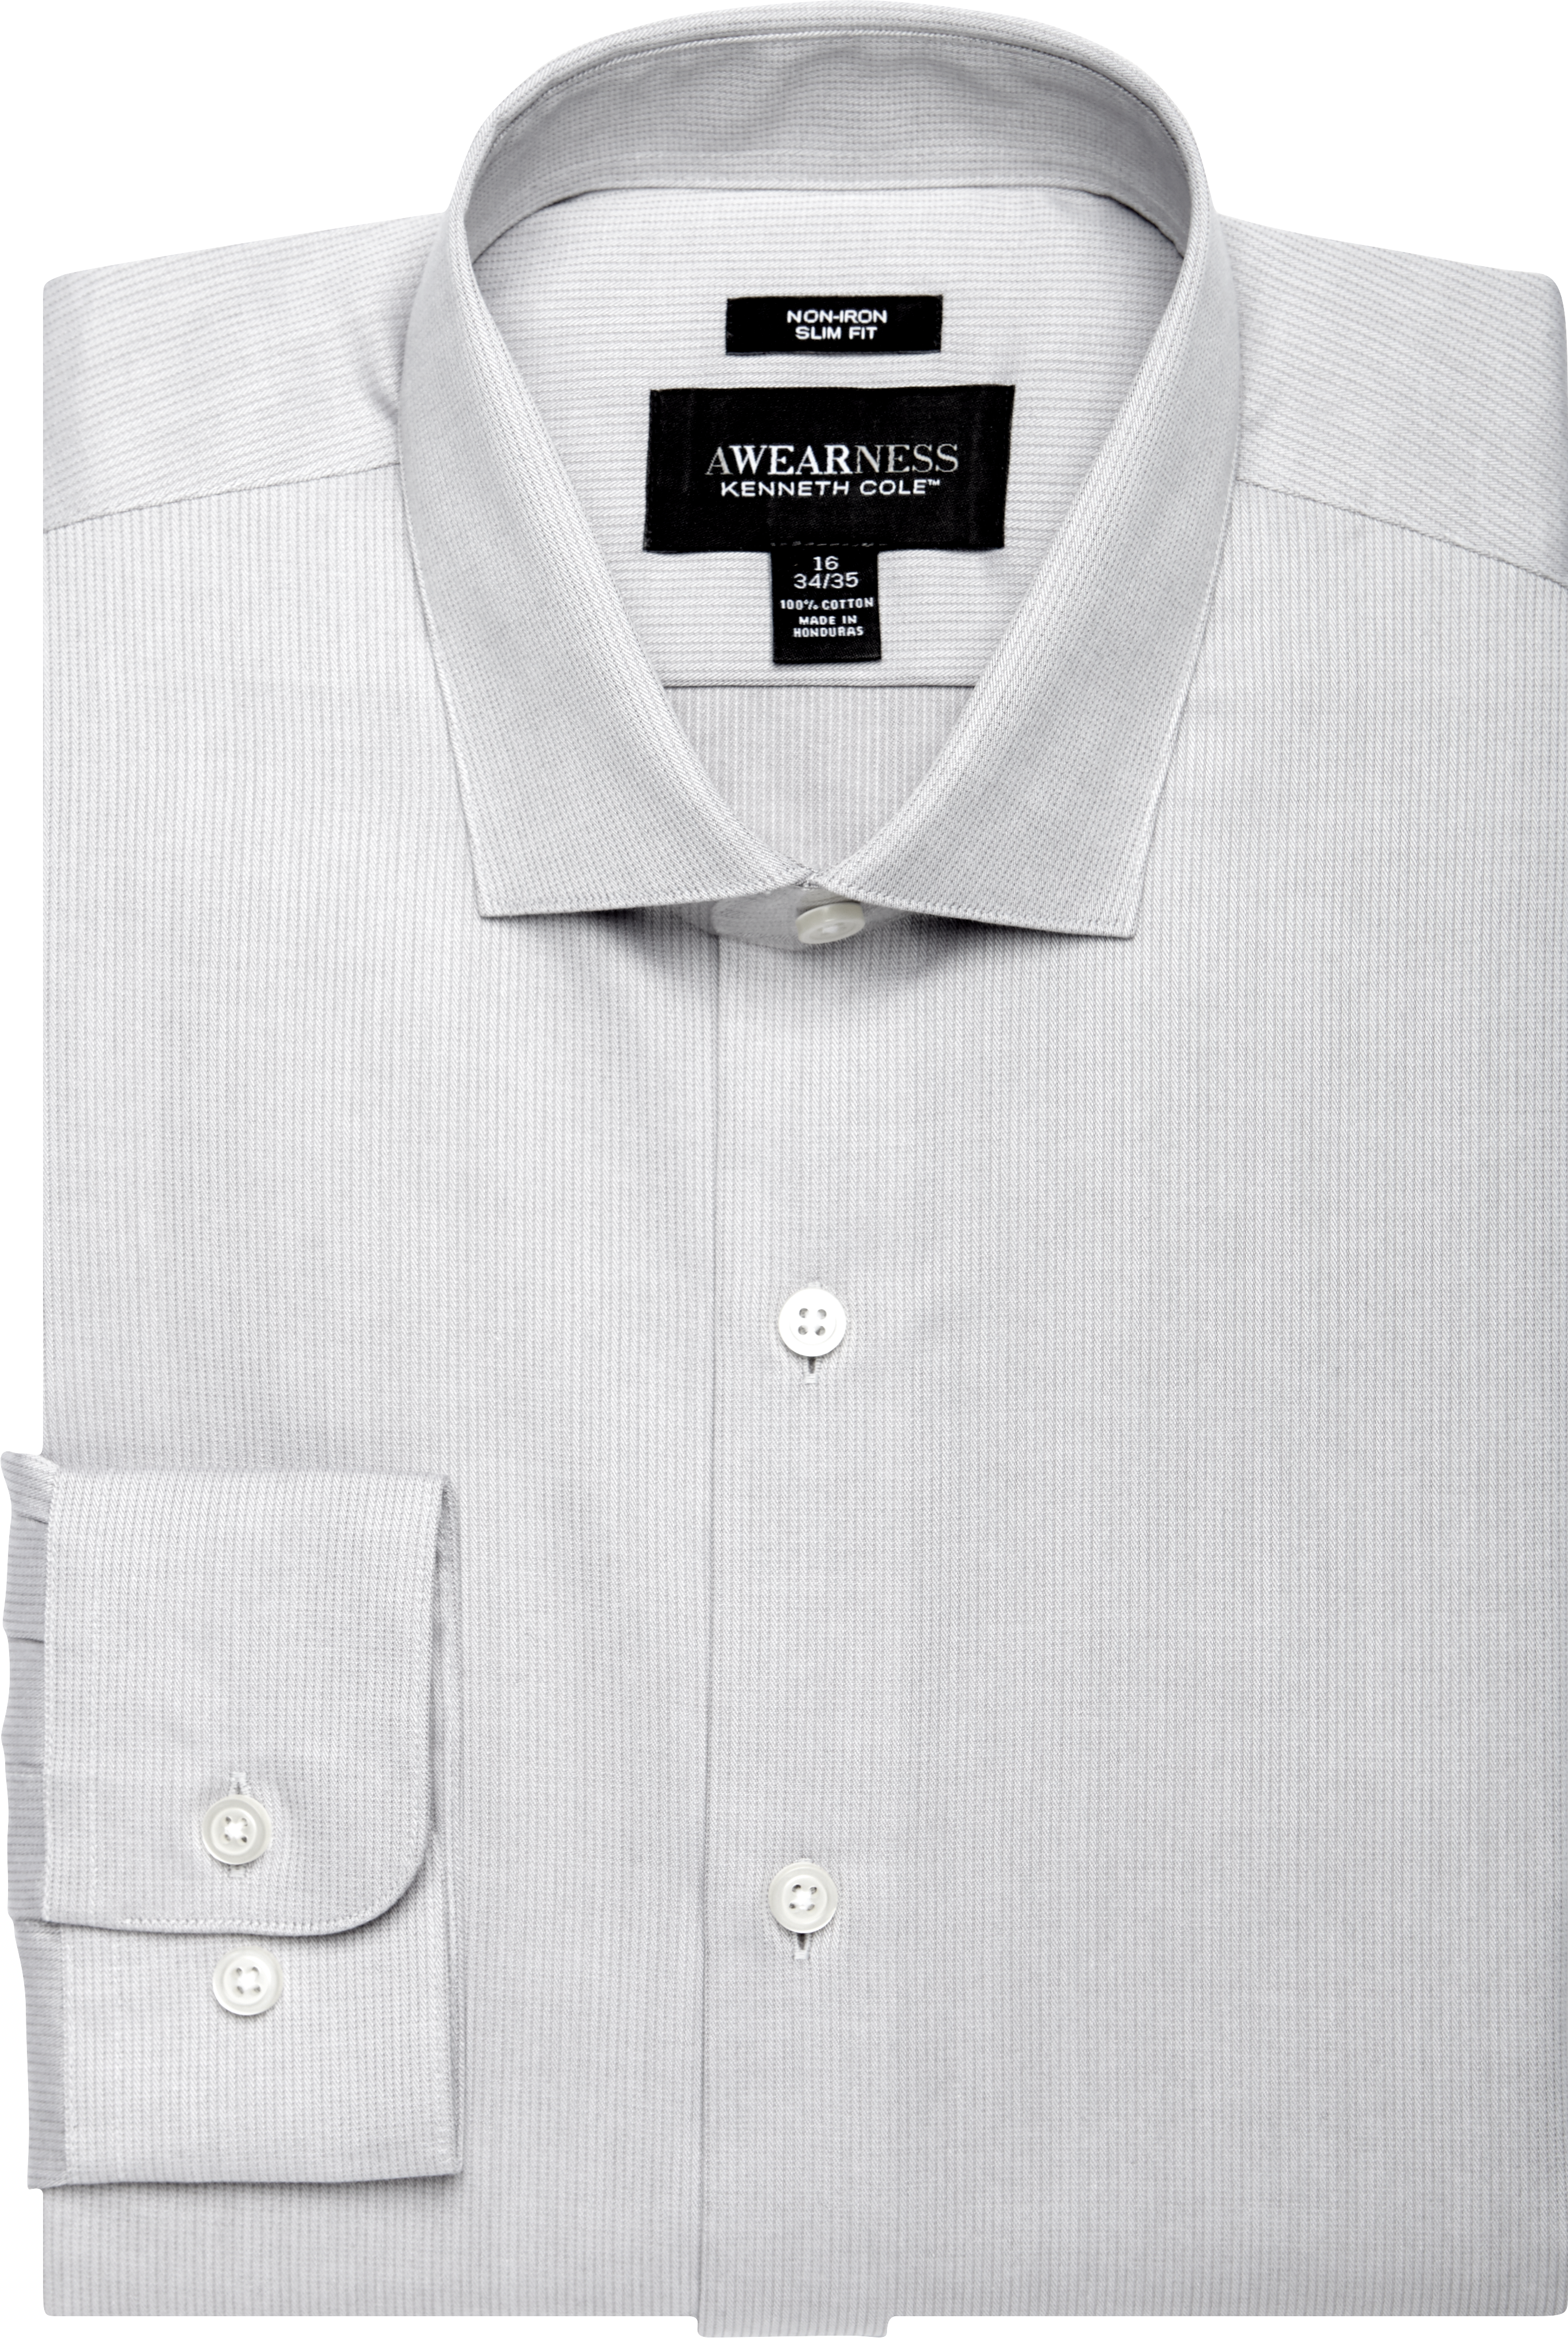 Awearness Kenneth Cole Light Gray Slim Fit Dress Shirt - Men's Sale ...